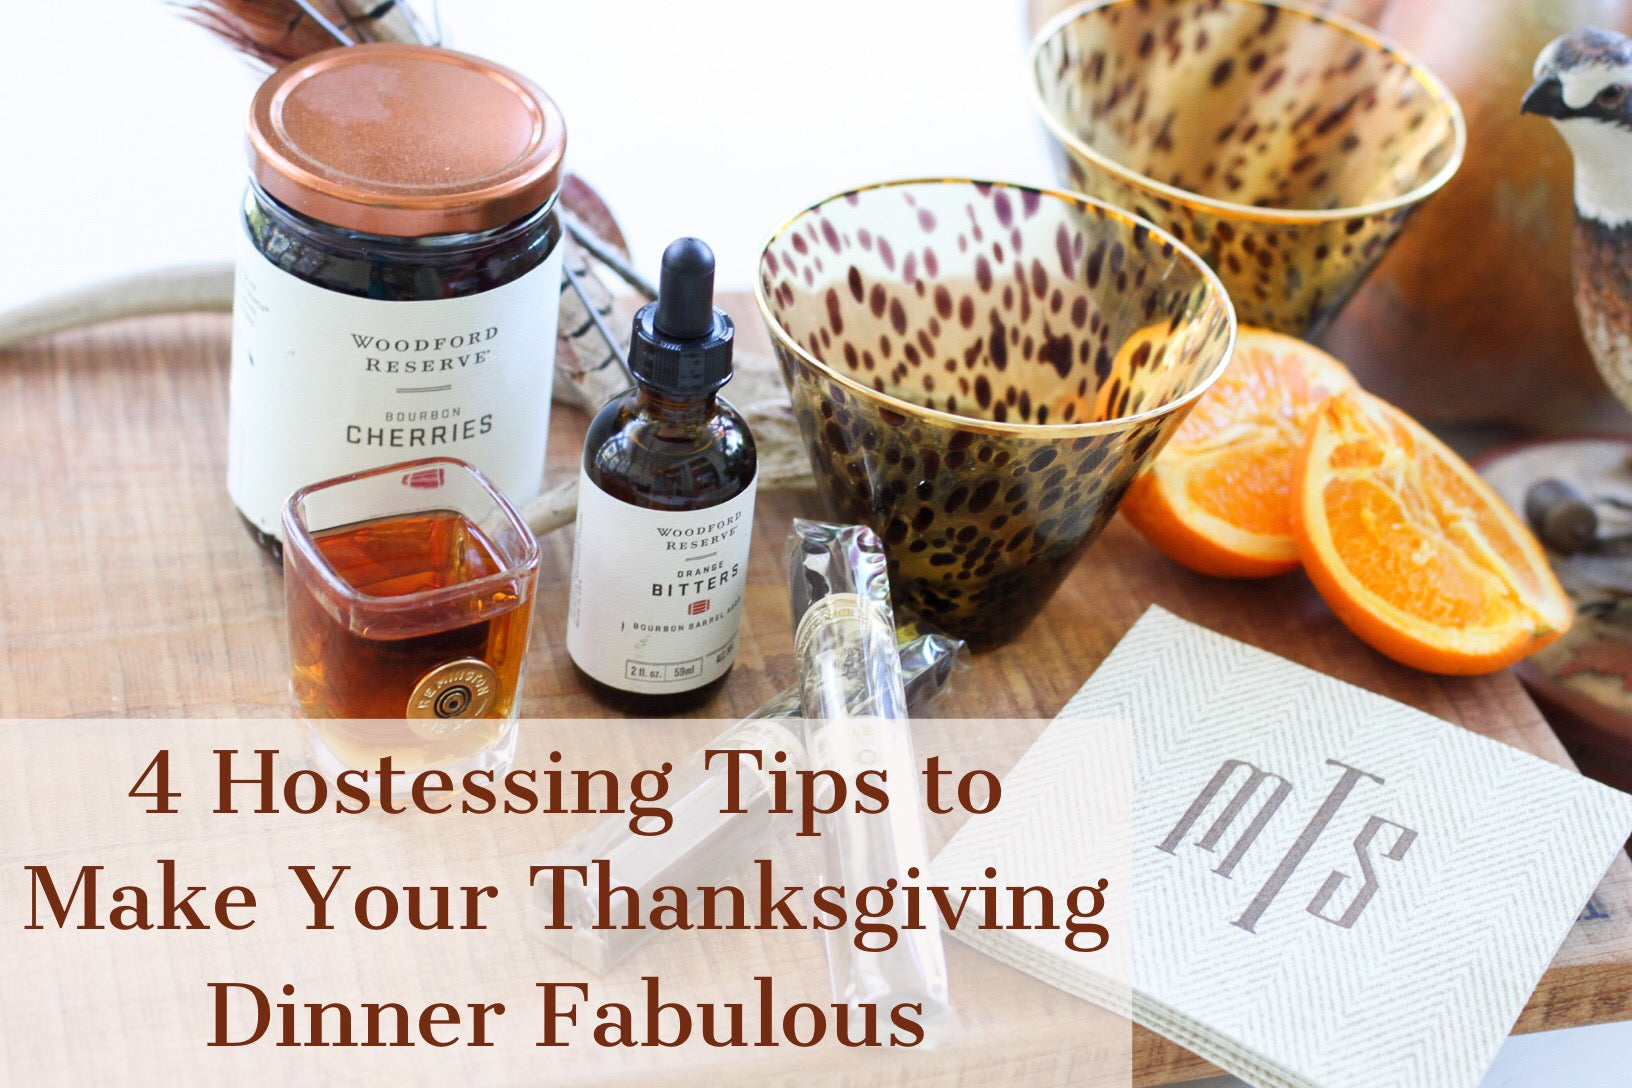 4 Hostessing Tips to Make Your Thanksgiving Dinner Fabulous